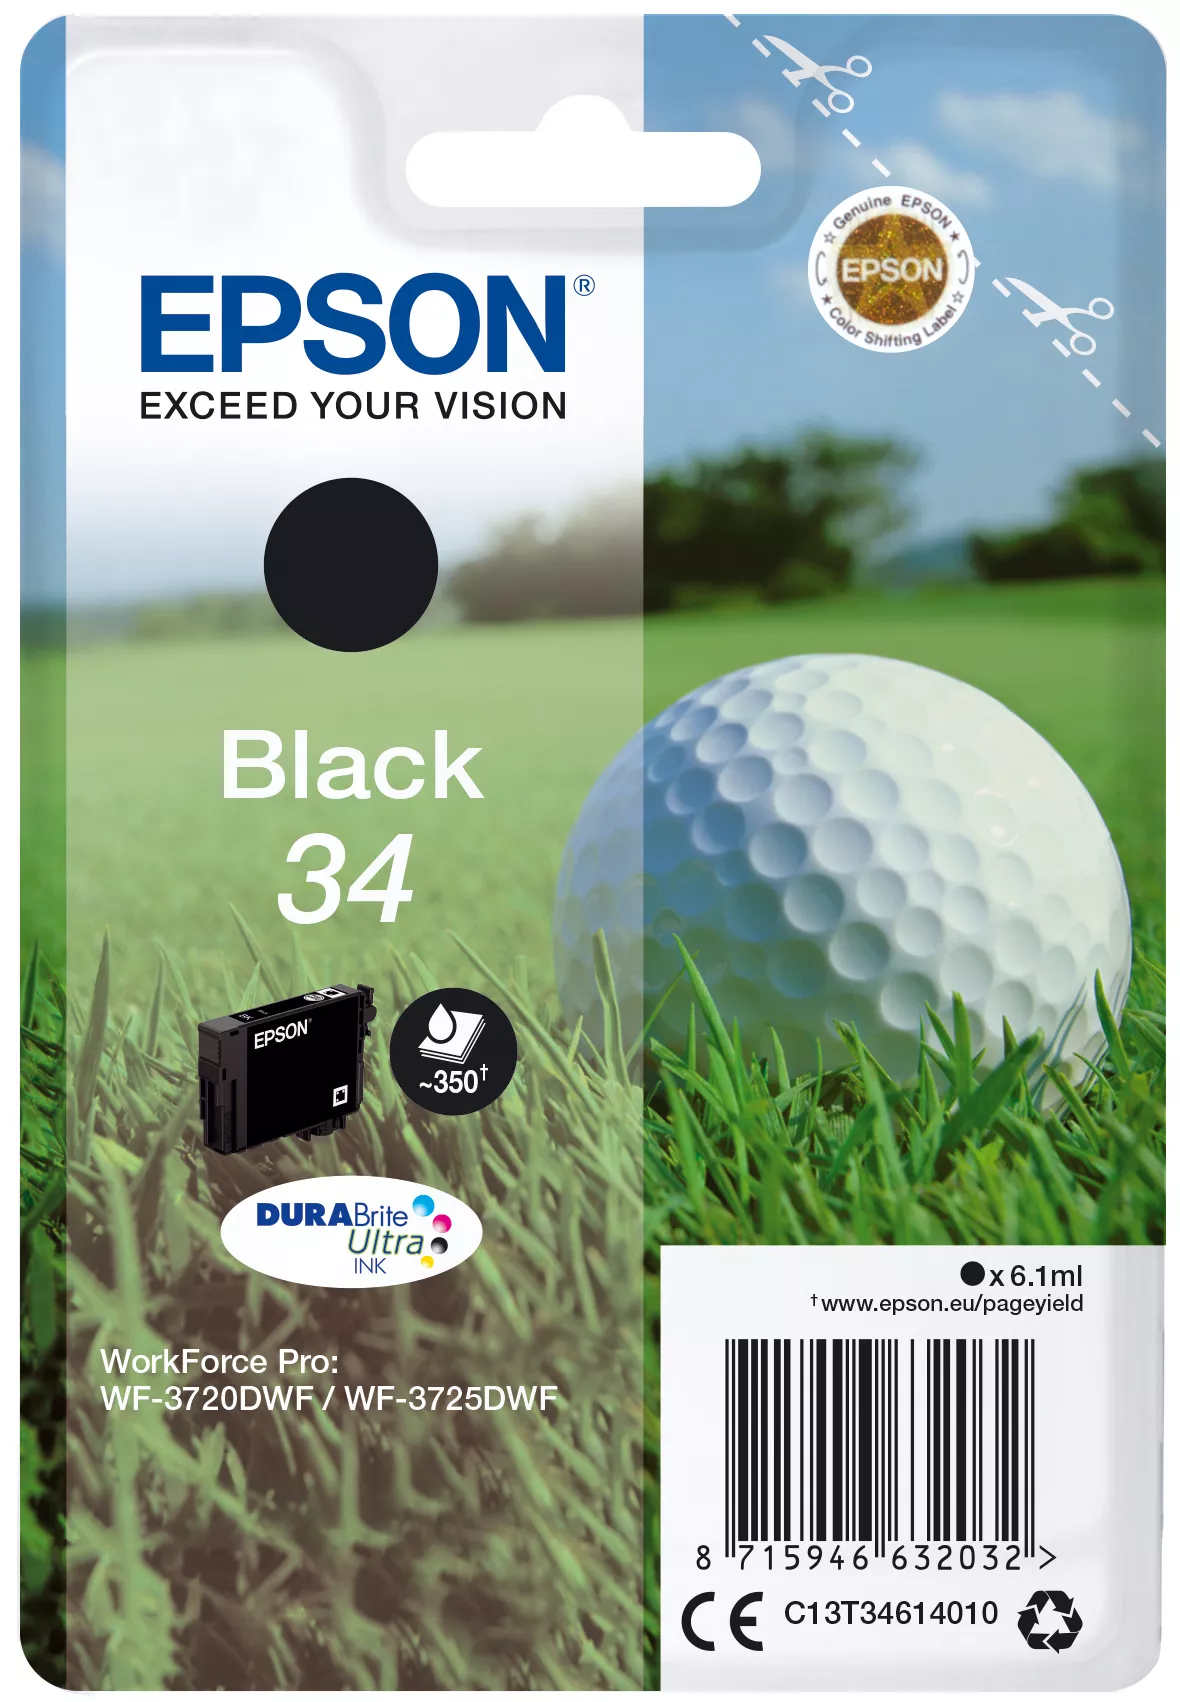 Vente EPSON Singlepack Noir 34 - DURABrite Ultra Encre au meilleur prix